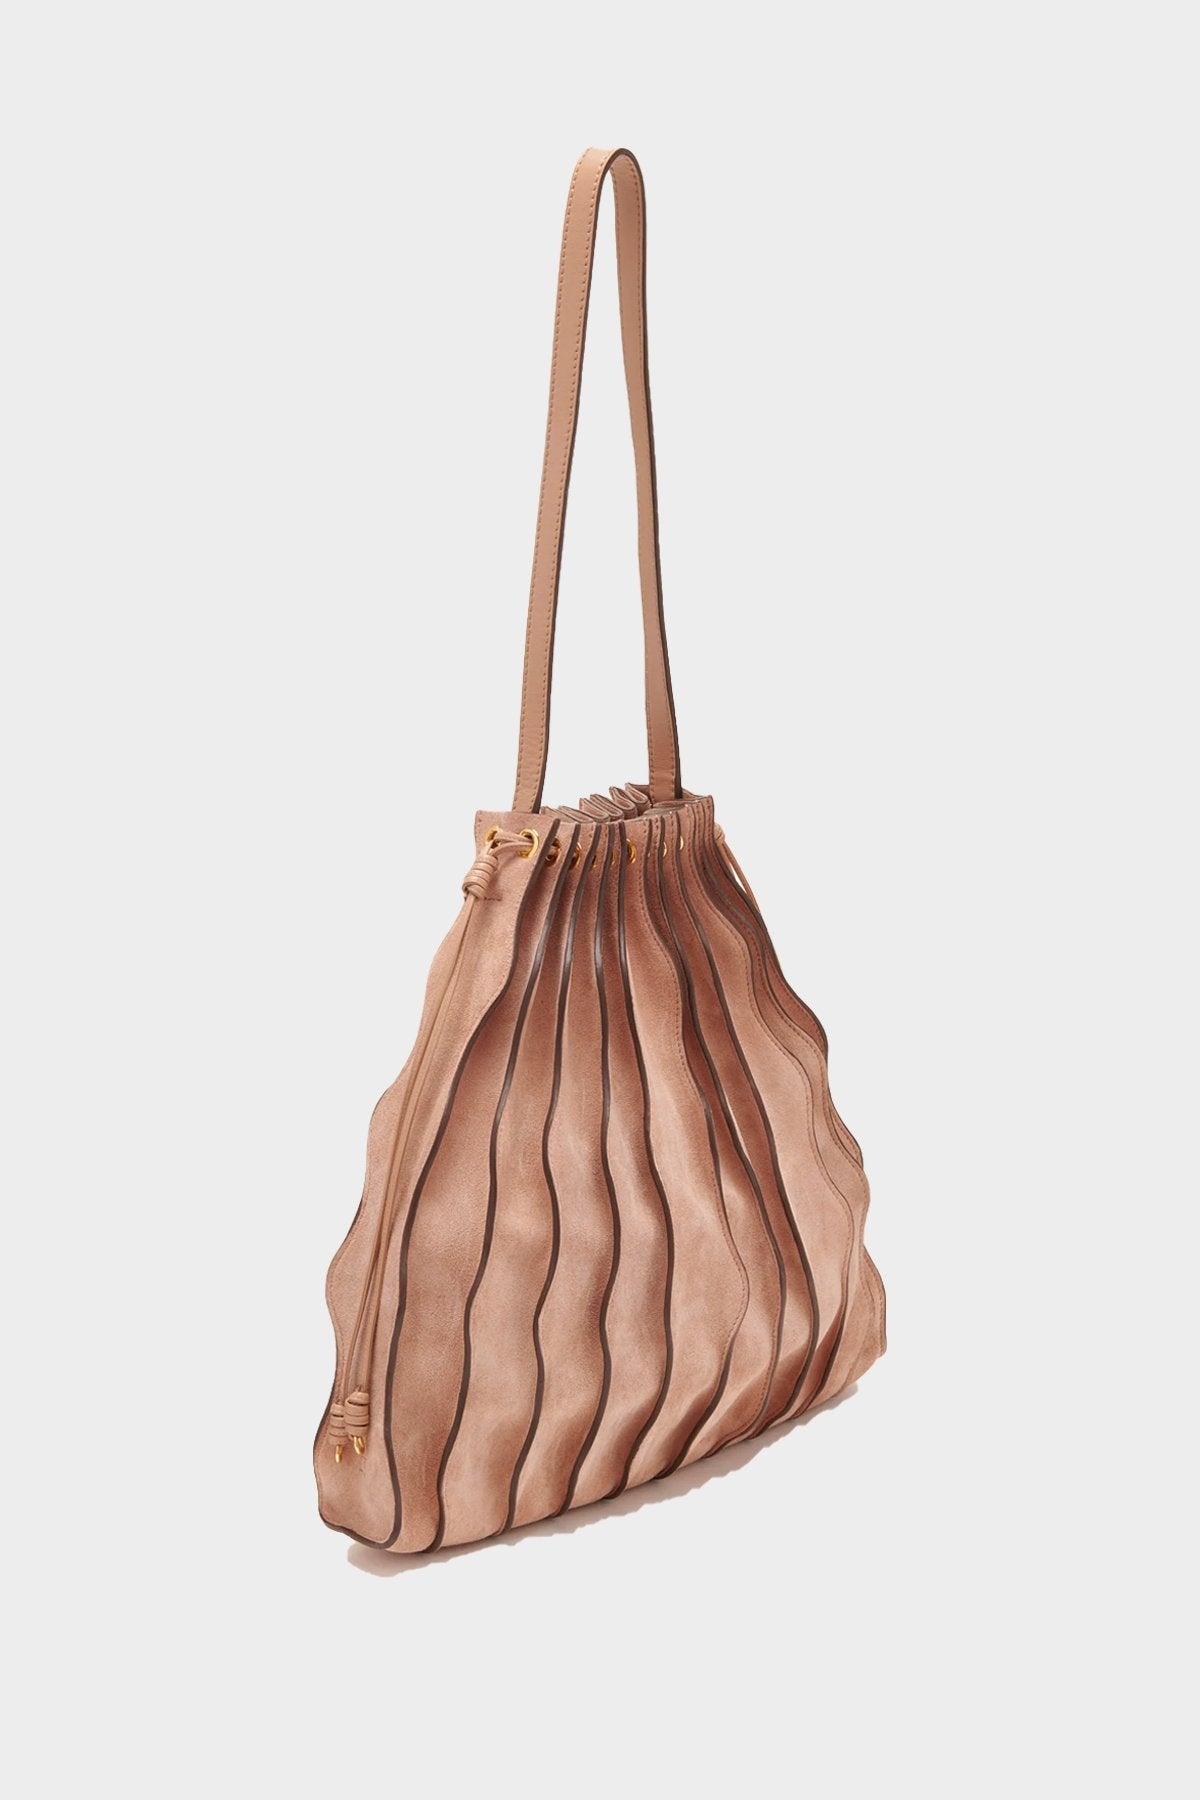 Adria Large Pleated Wave Bag in Blush - shop-olivia.com